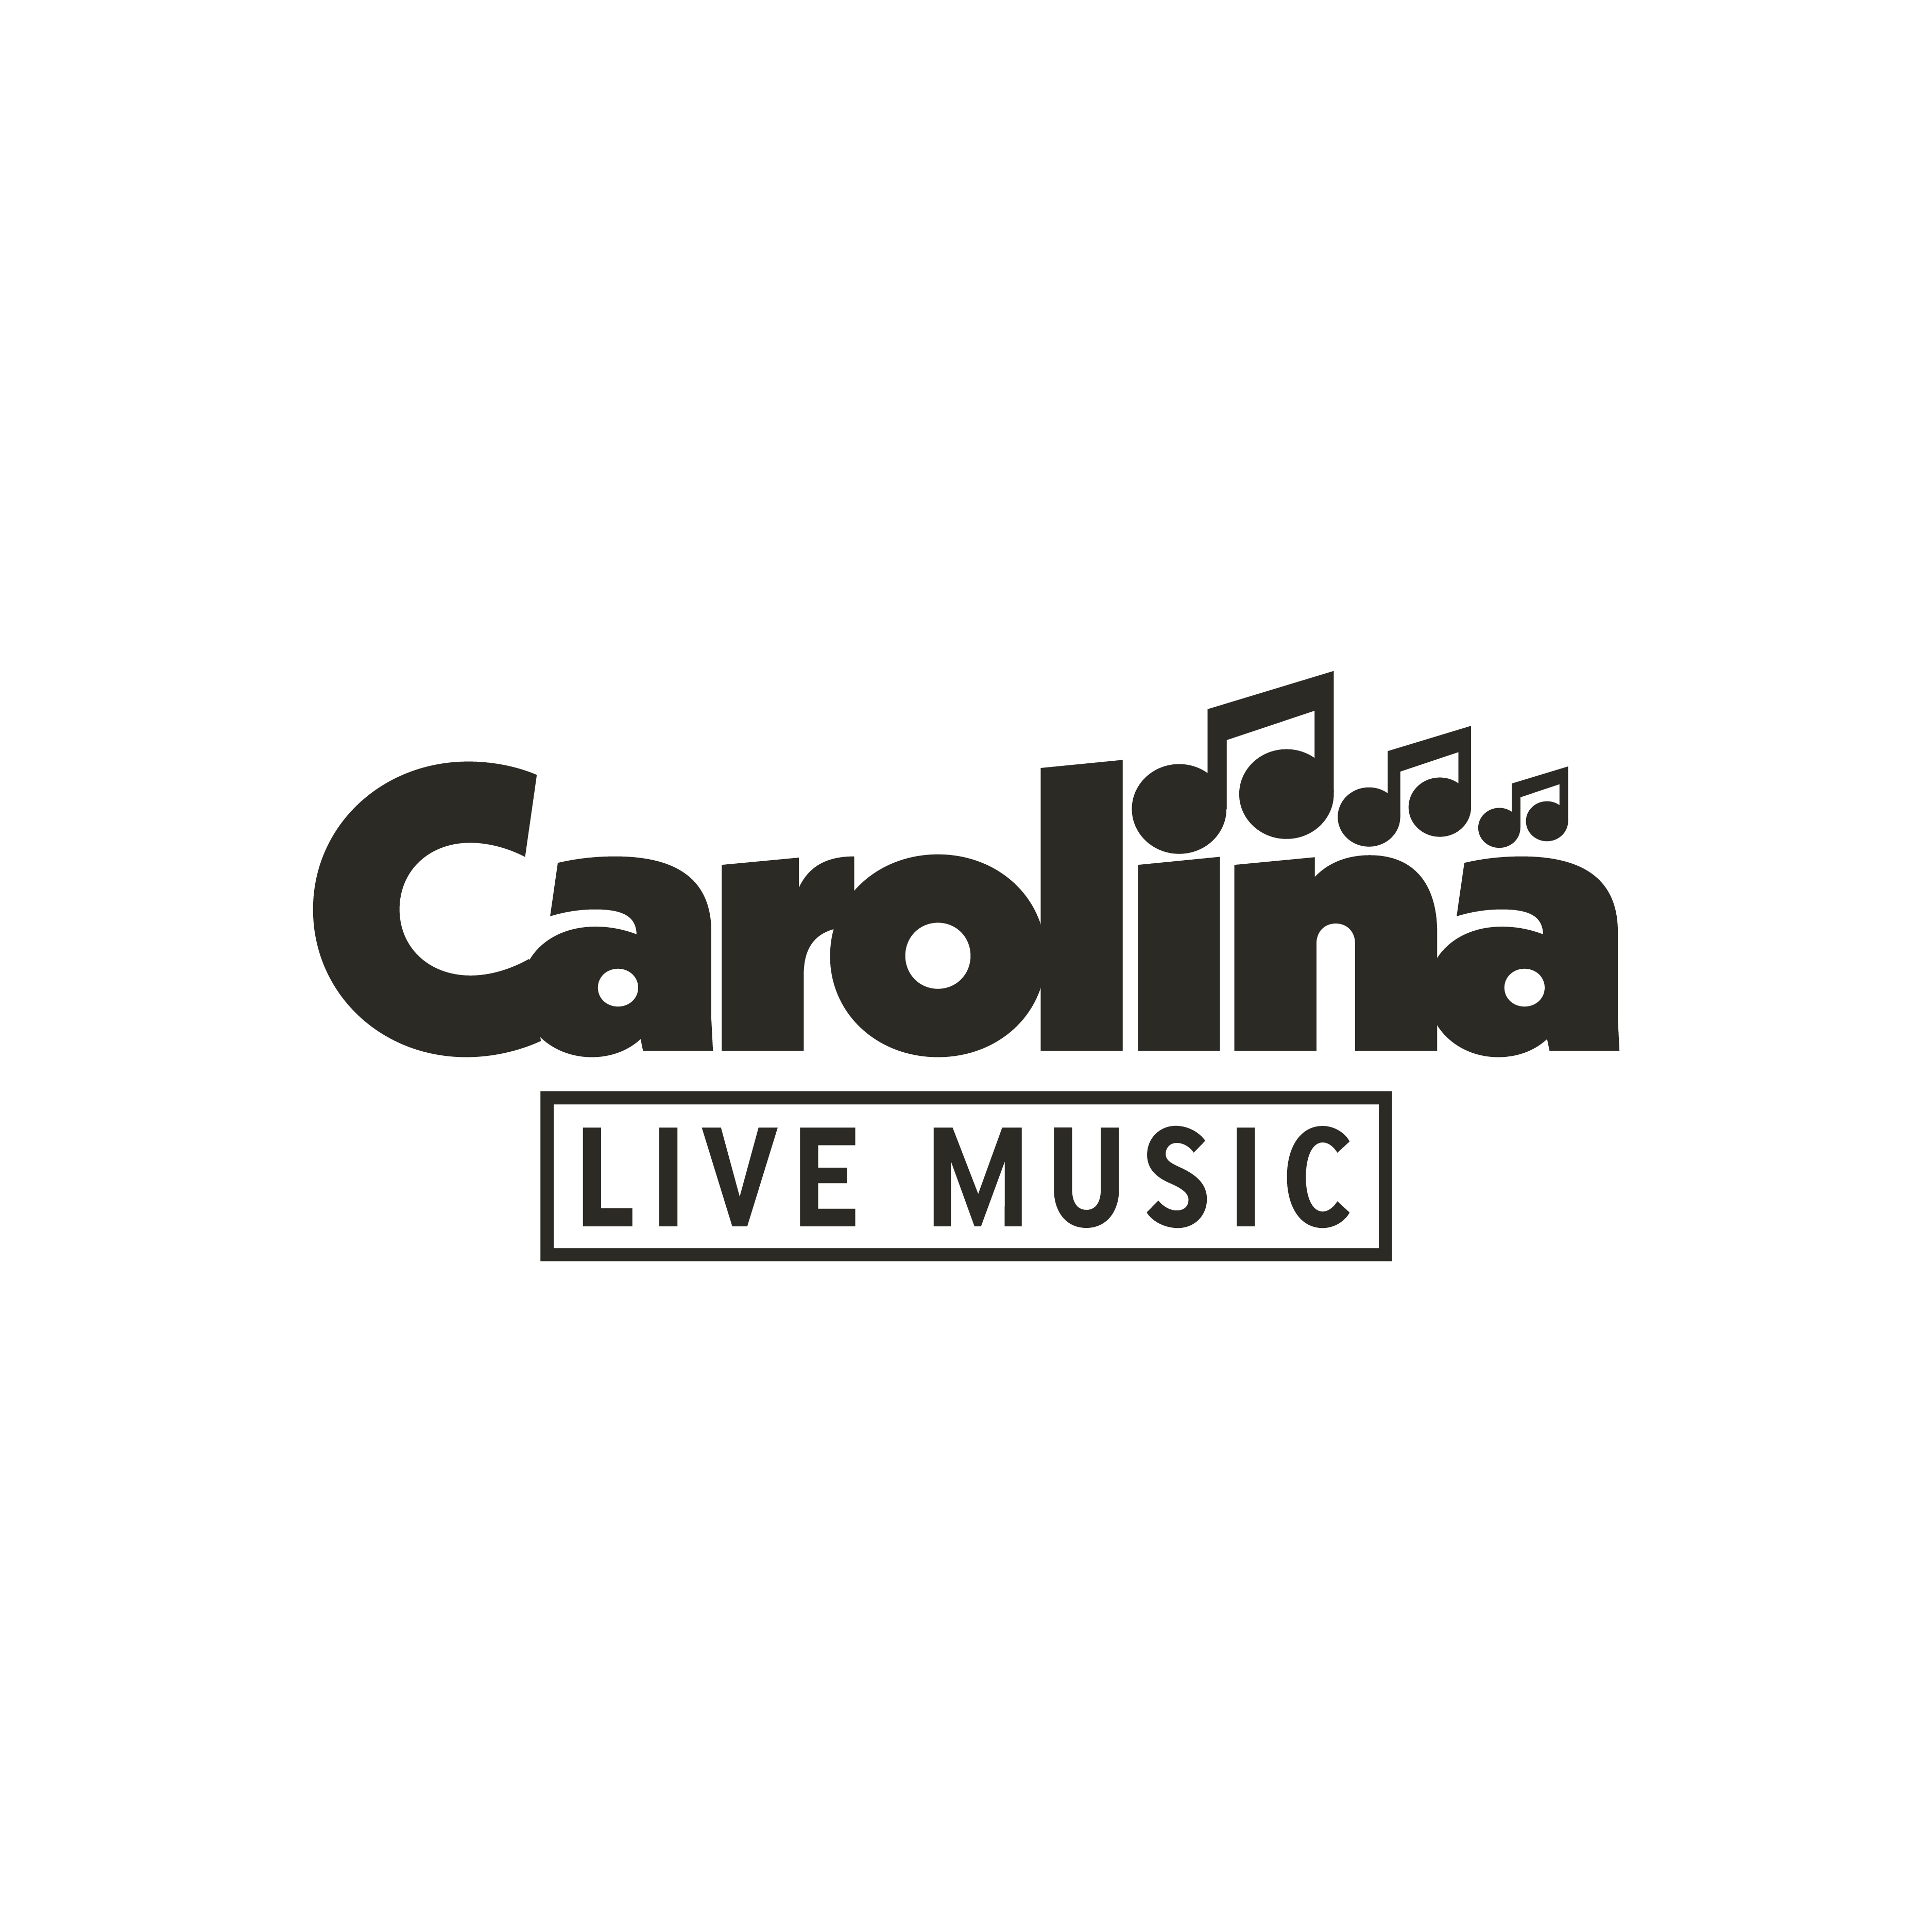 Carolina Live Music Wordmark logo design by logo designer Logarhythm Creative for your inspiration and for the worlds largest logo competition